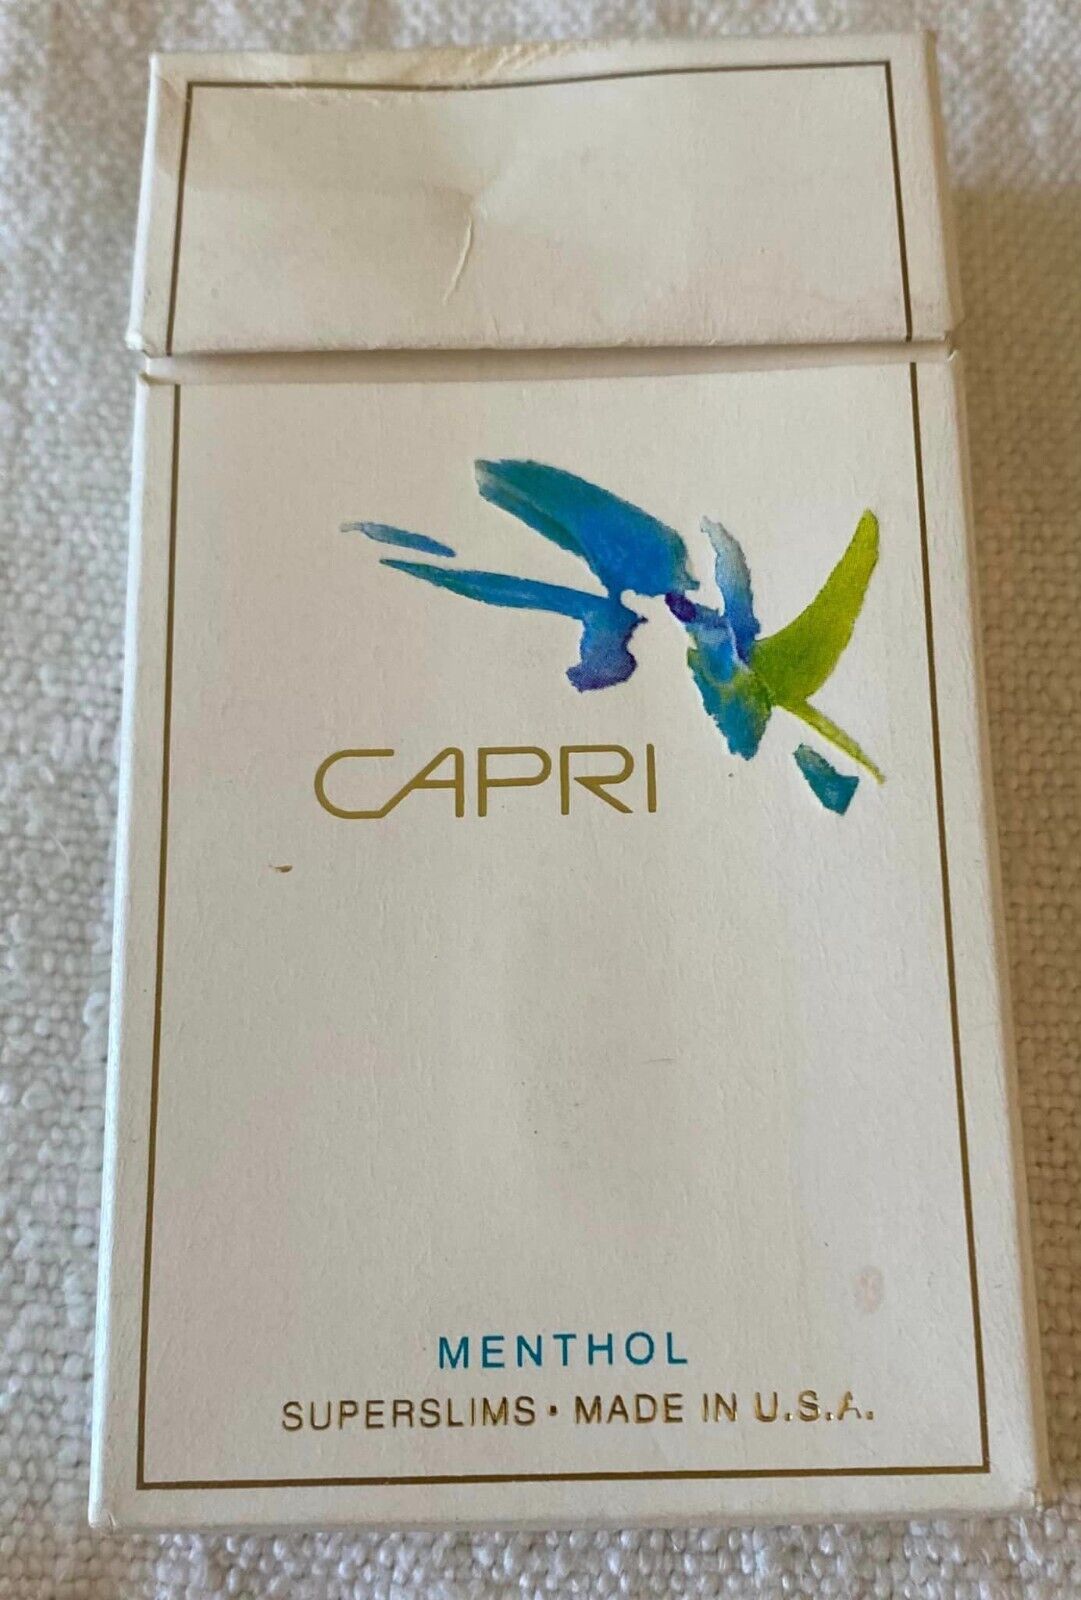 Vintage Capri Menthol Cigarette Cigarettes Cigarette Paper Box Empty Cigarette